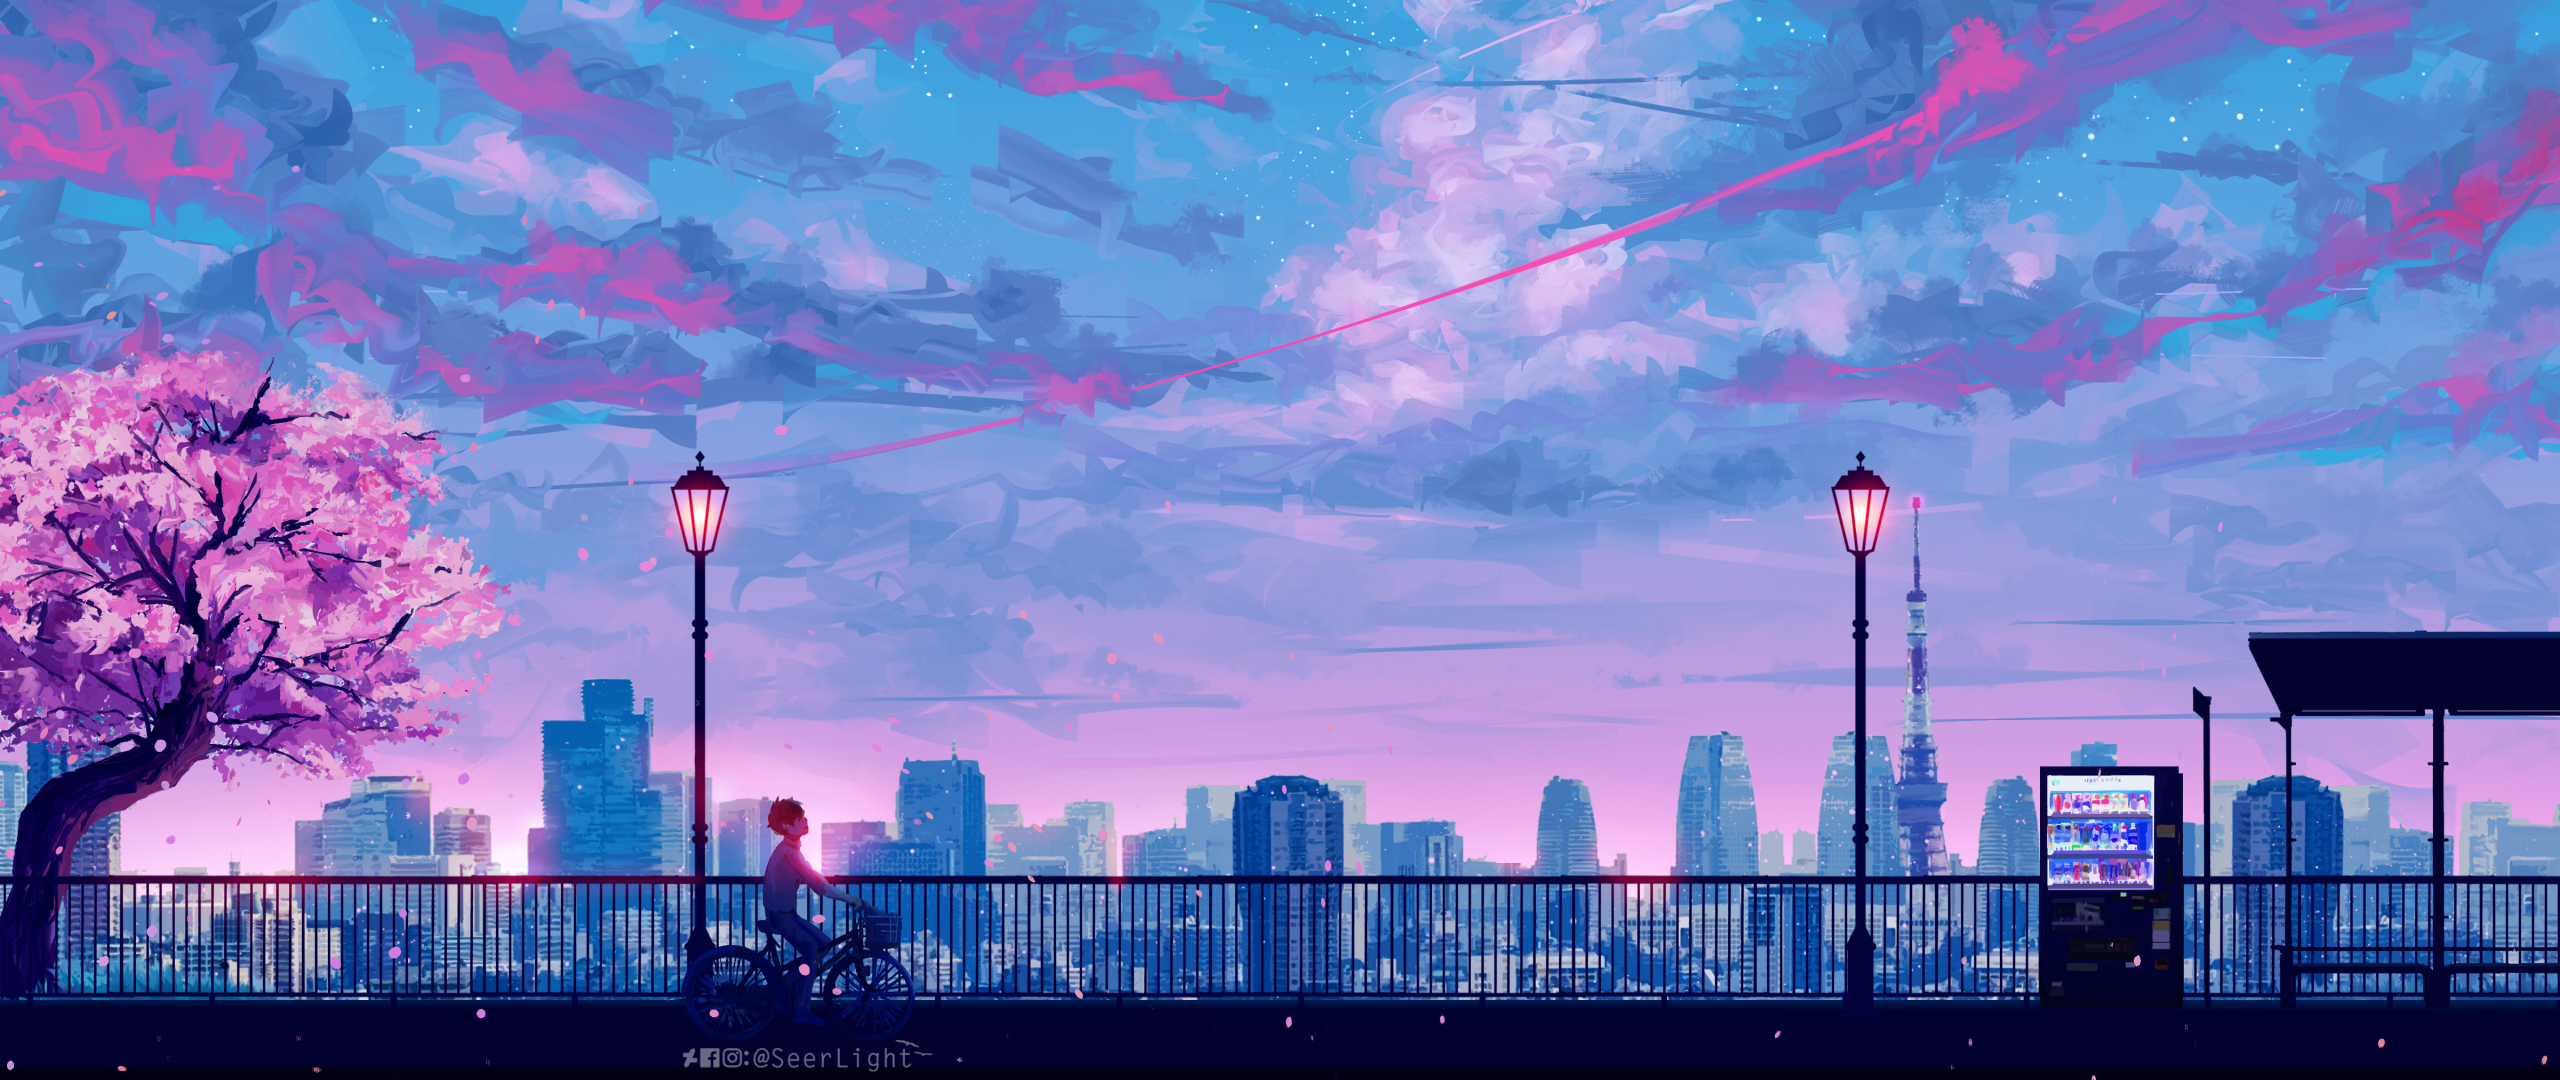 OC] (2560x1080) An UW Studio Ghibli Wallpaper I made in PS. Hope you all  like it! : r/Animewallpaper